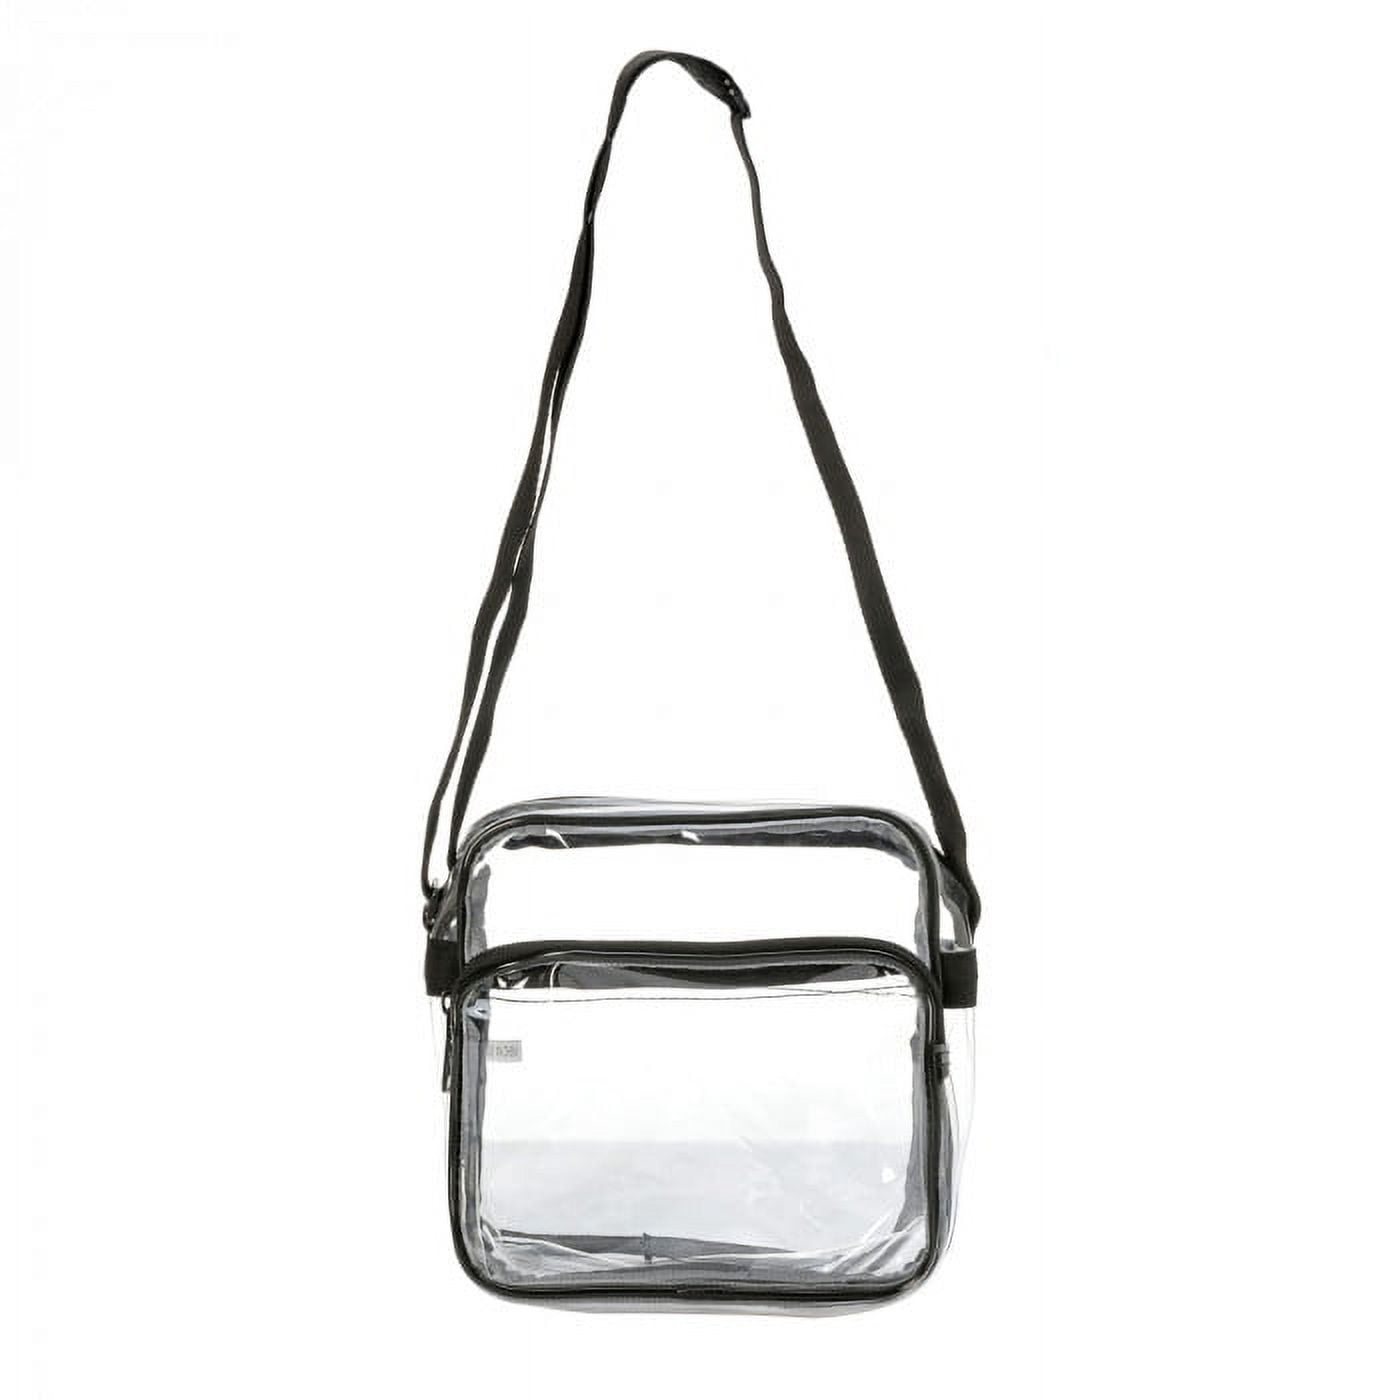 Translucent clutch bag clear clutch purse small PVC by MeDusaBrand